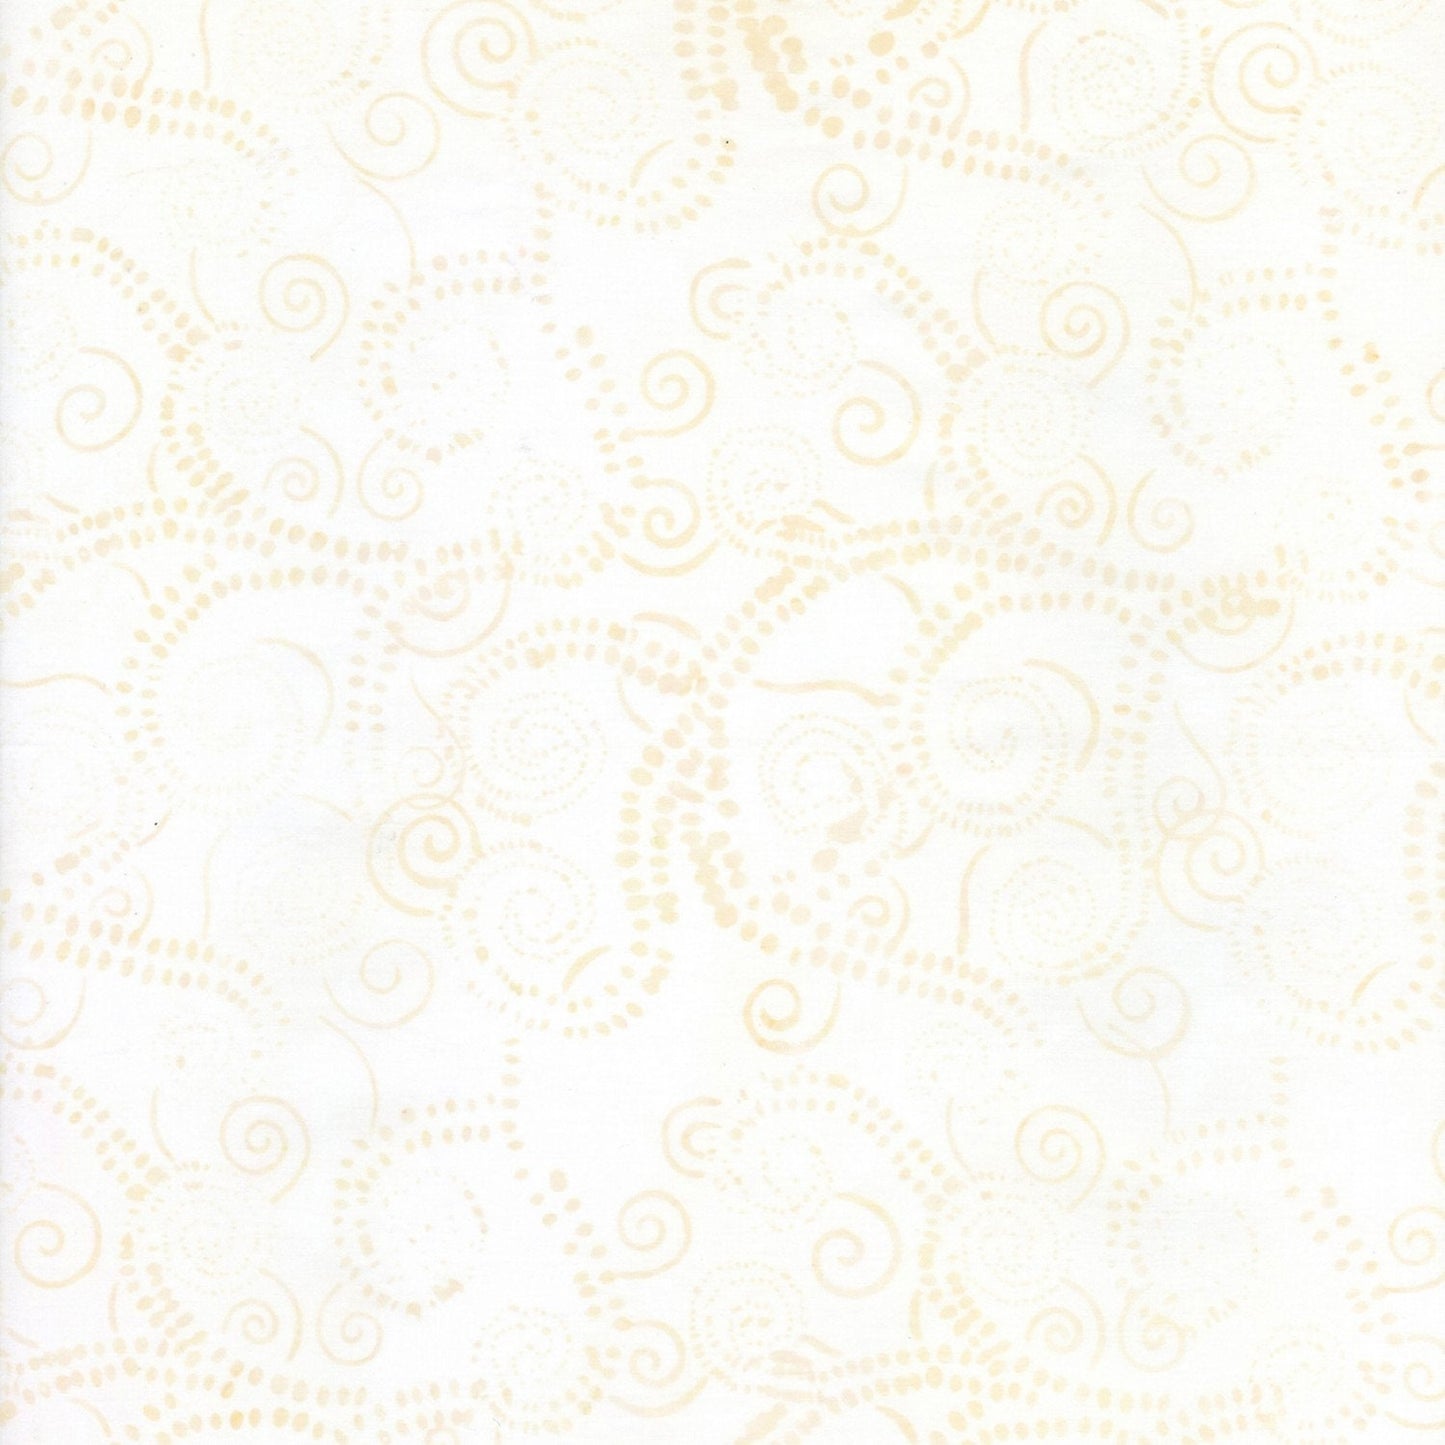 Alabaster 5" Squares, Timeless Treasures Treat-Mini42 Alabaster, Neutral Background Batik Charm Pack Fabric, 5" Inch Precut Fabric Squares